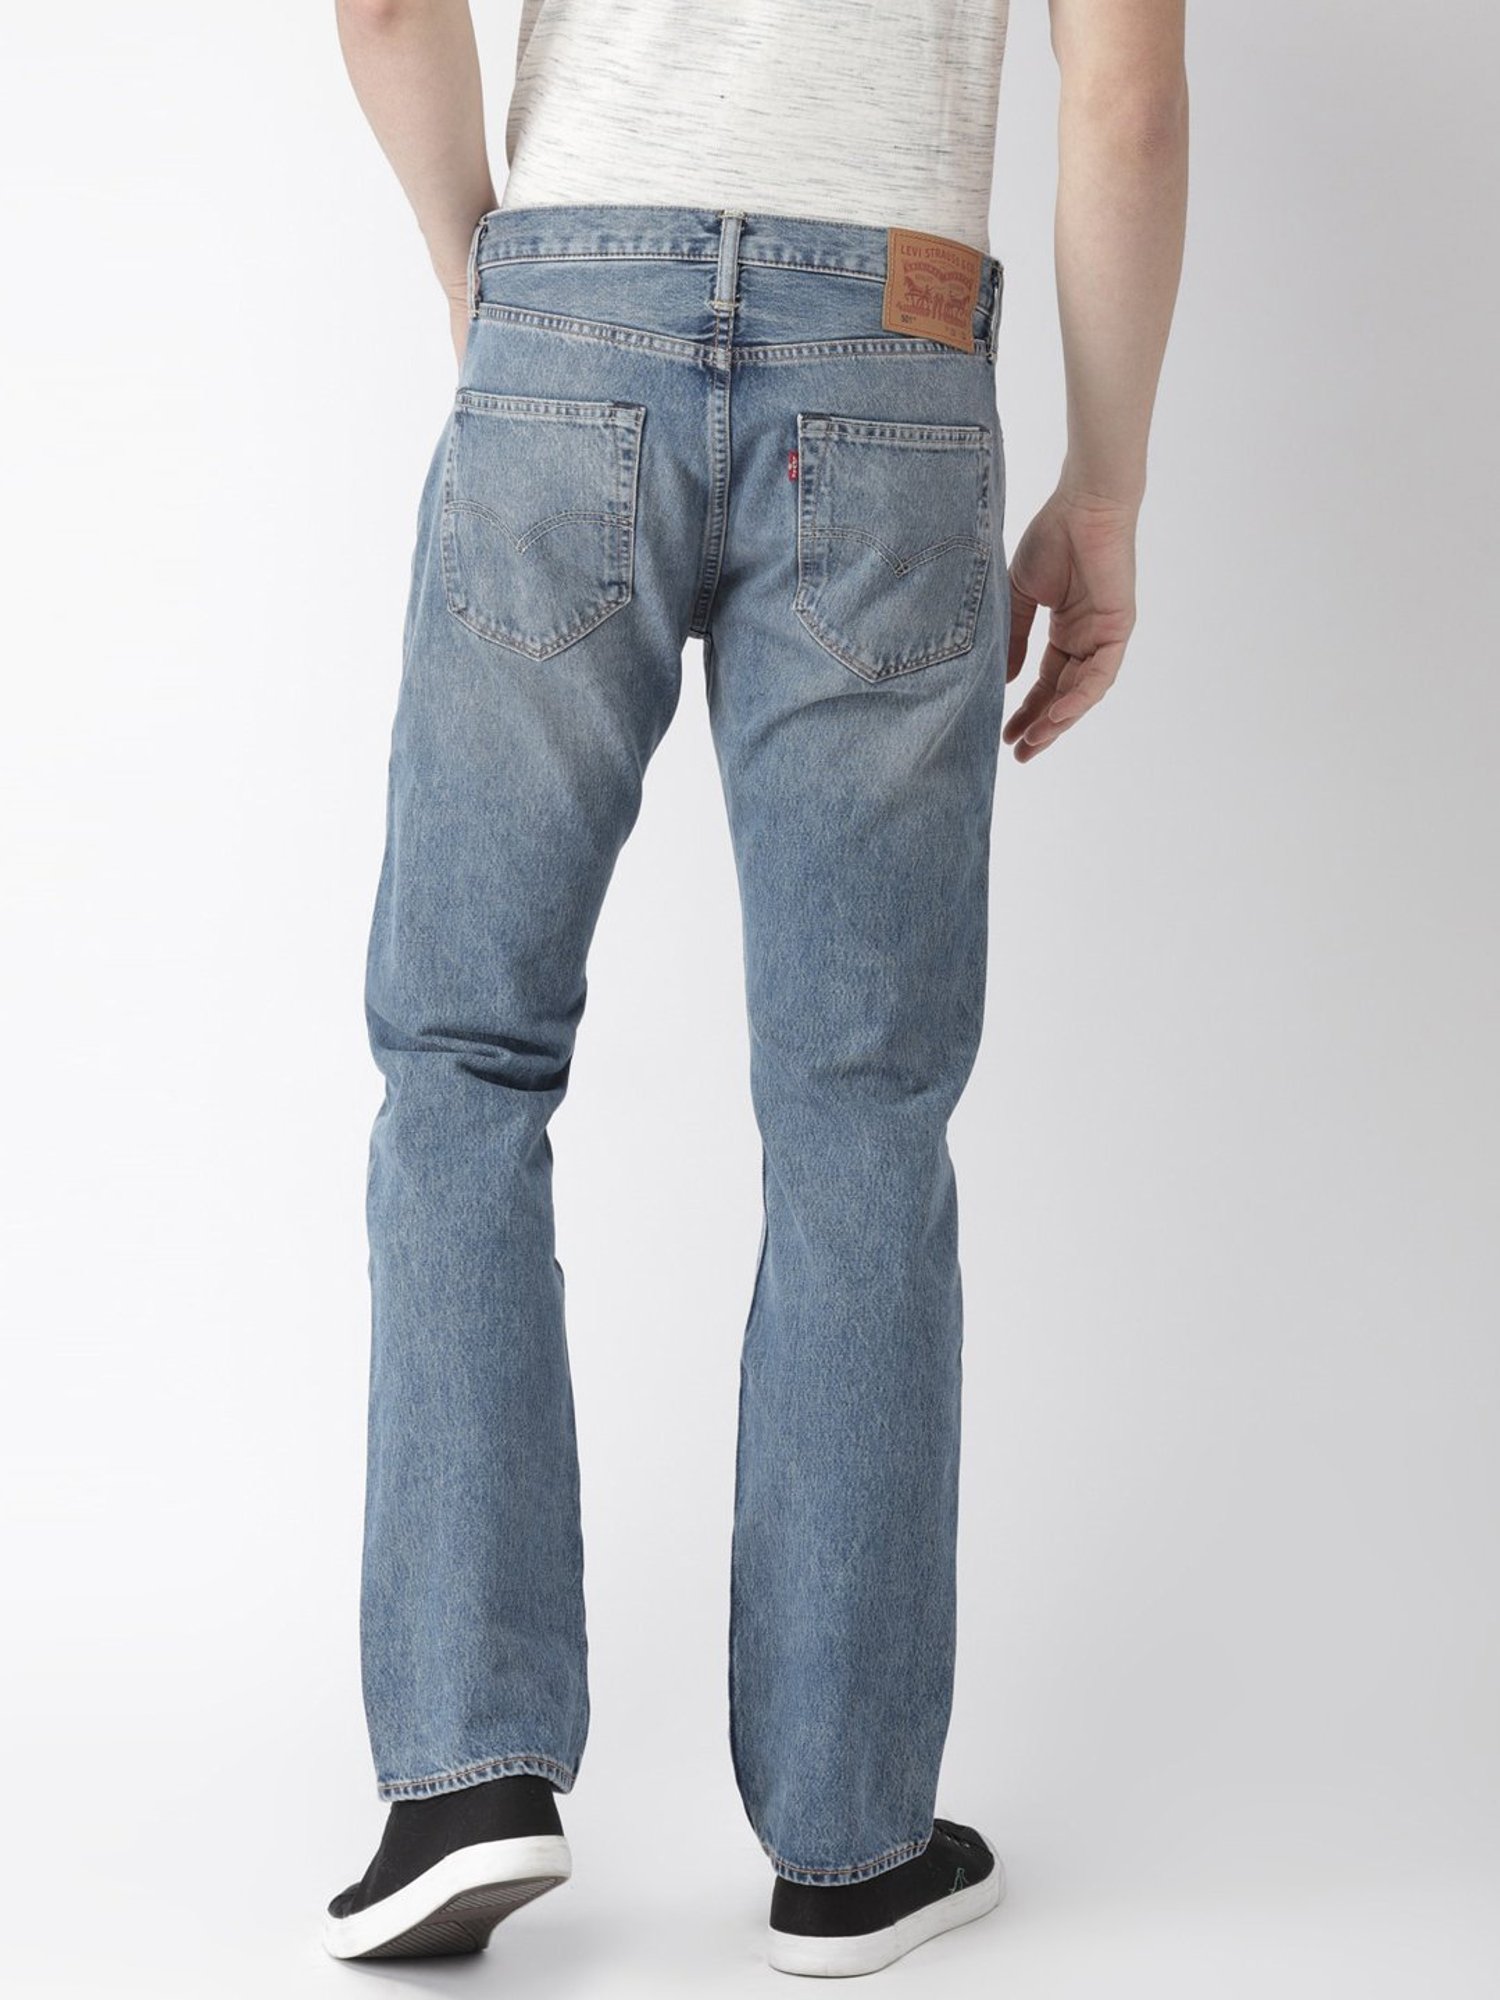 George Men's and Big Men's Regular Fit Jeans